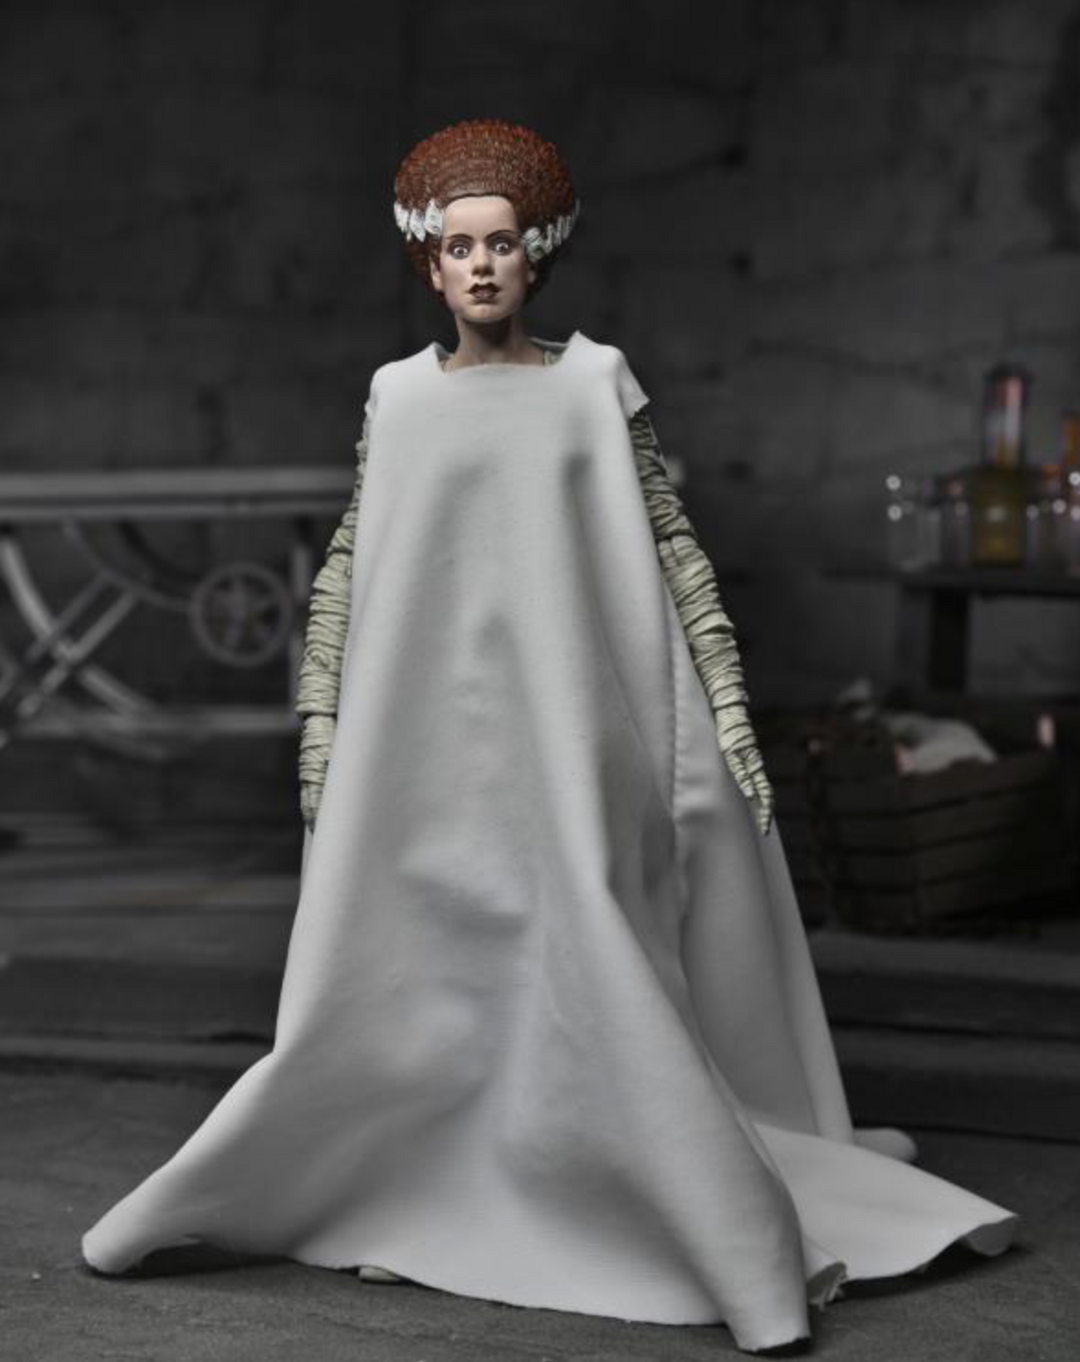 NECA Universal Monsters Ultimate Bride of Frankenstein (Colour) 7" Action Figure